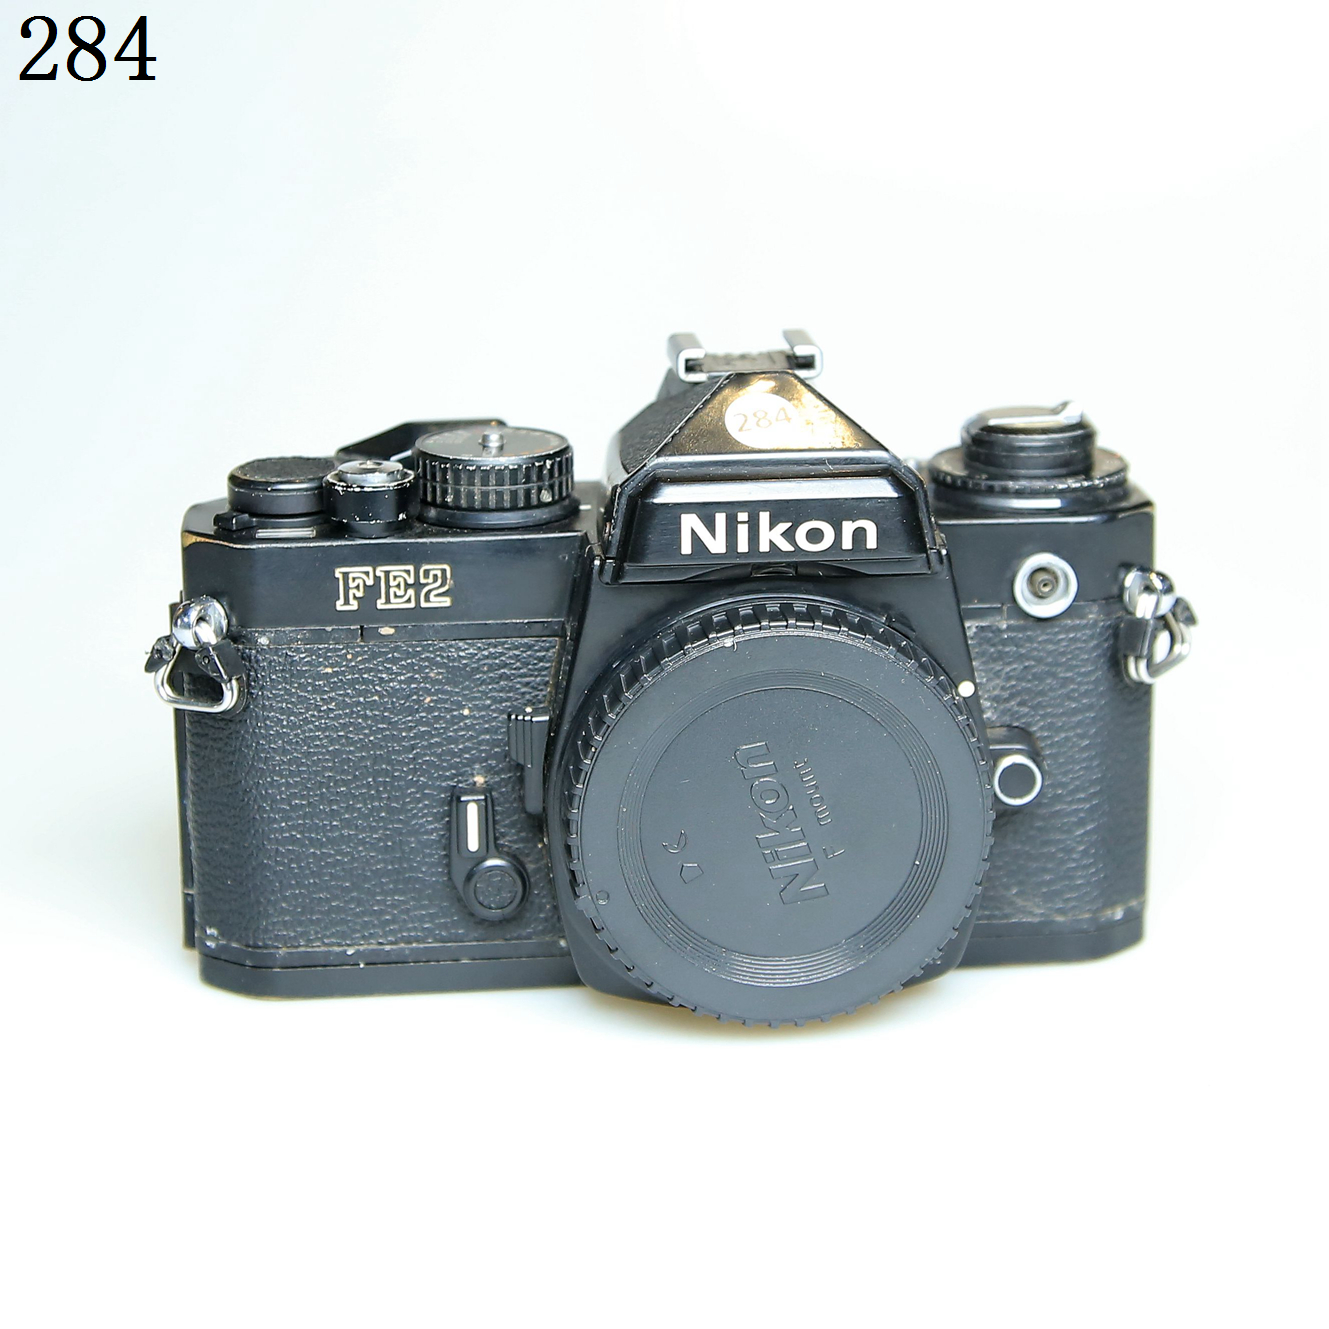  Nikon FE2 film camera number 284